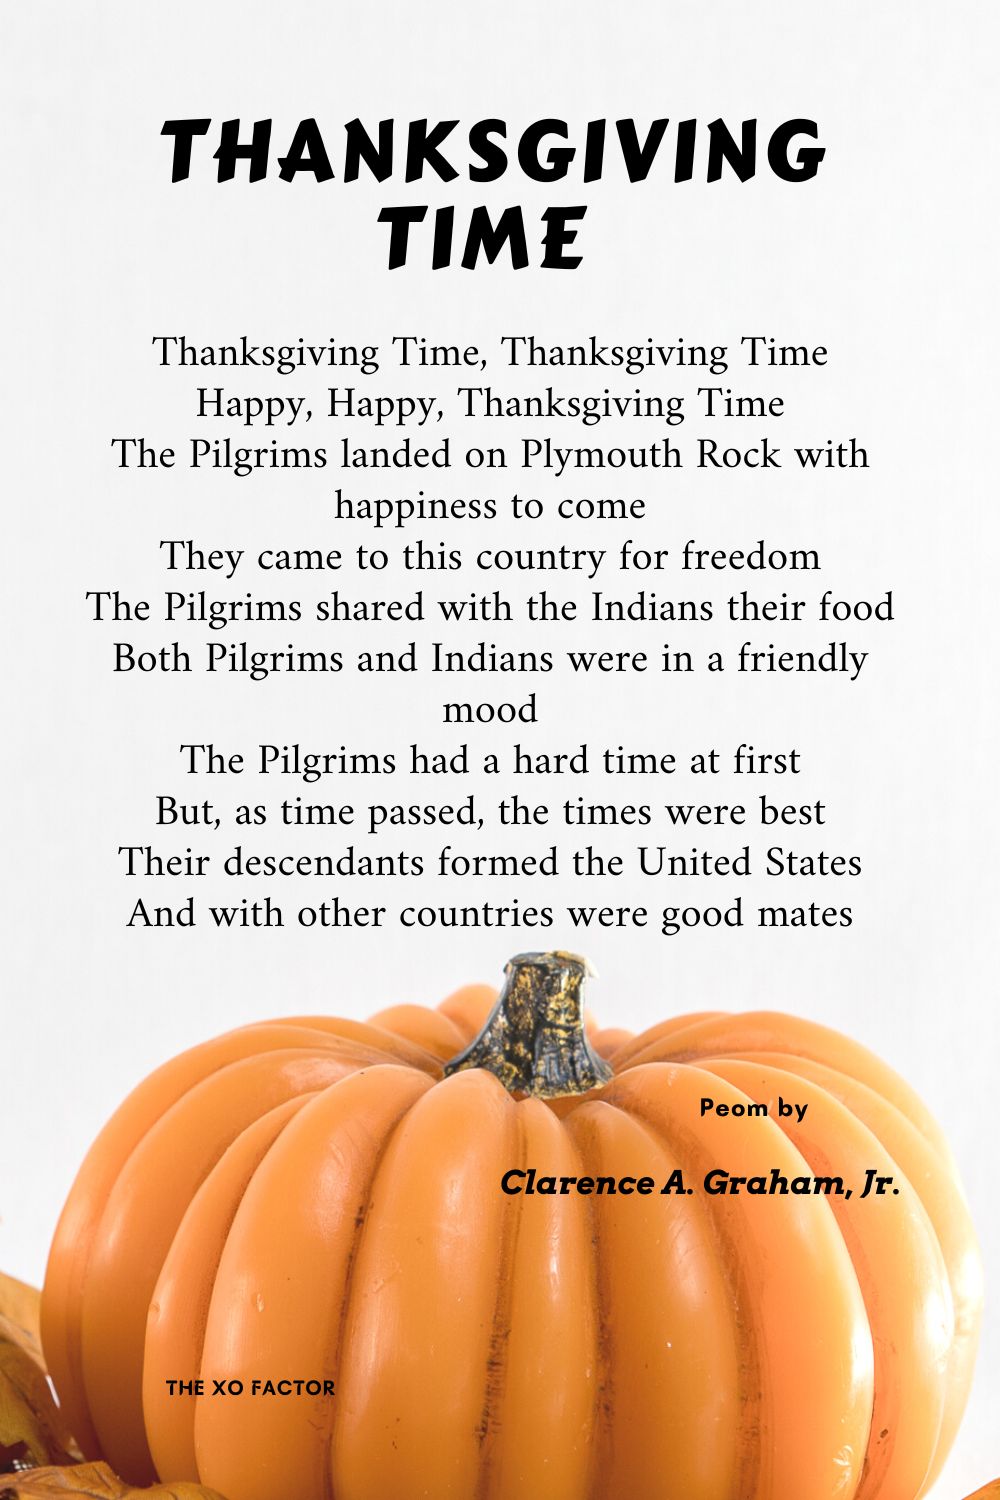 Thanksgiving Time Poem 